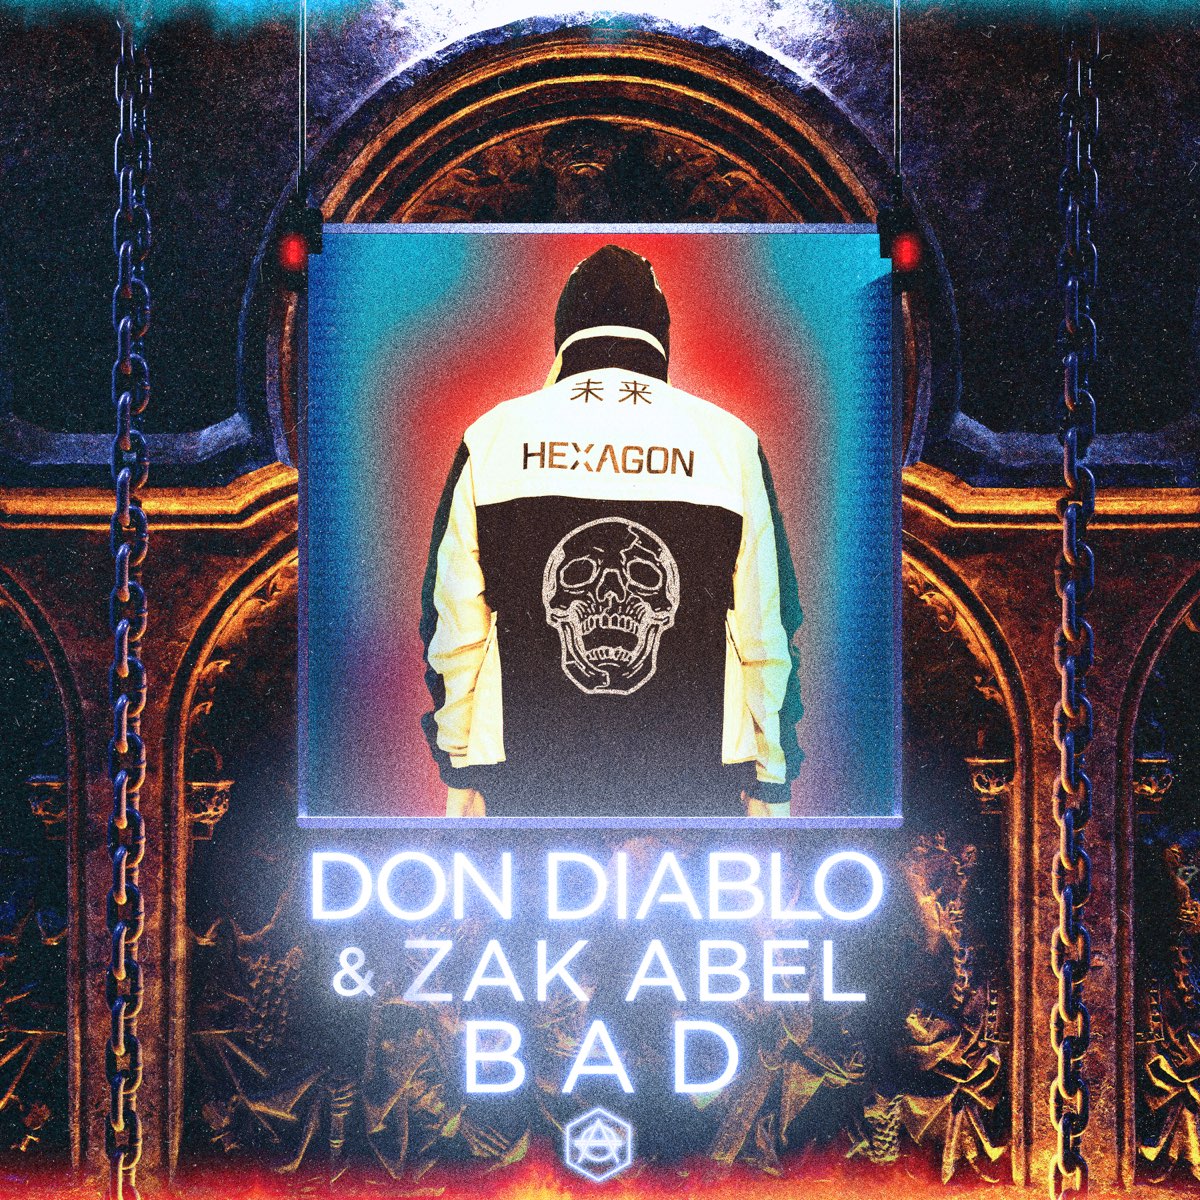 Bad - Single by Don Diablo & Zak Abel on Apple Music